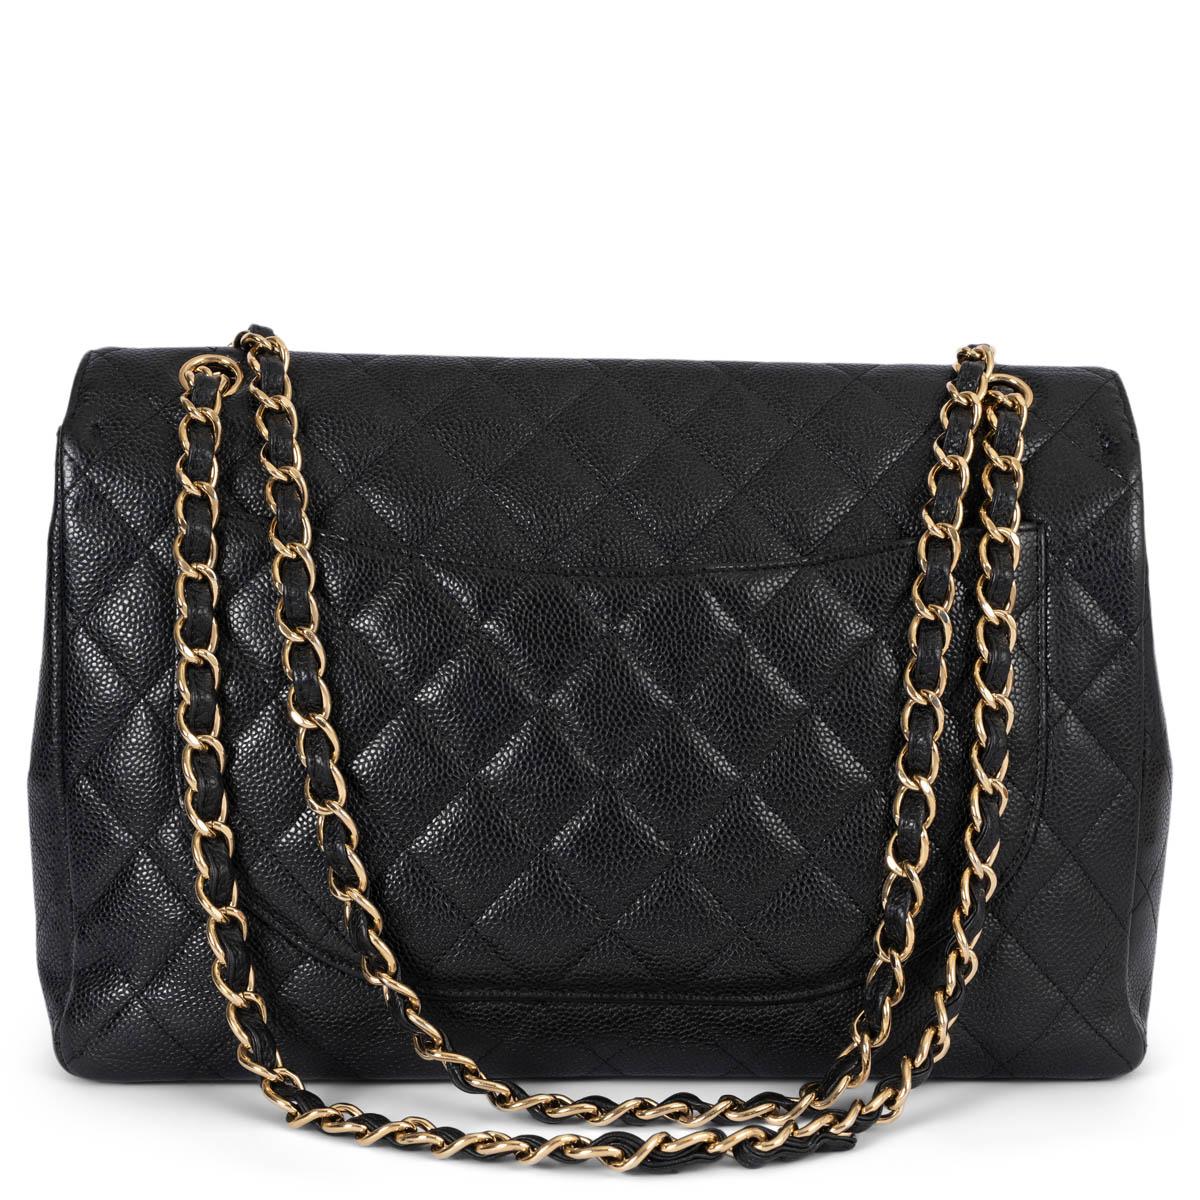 Women's CHANEL black Caviar leather CLASSIC MAXI SINGLE FLAP Shoulder Bag For Sale